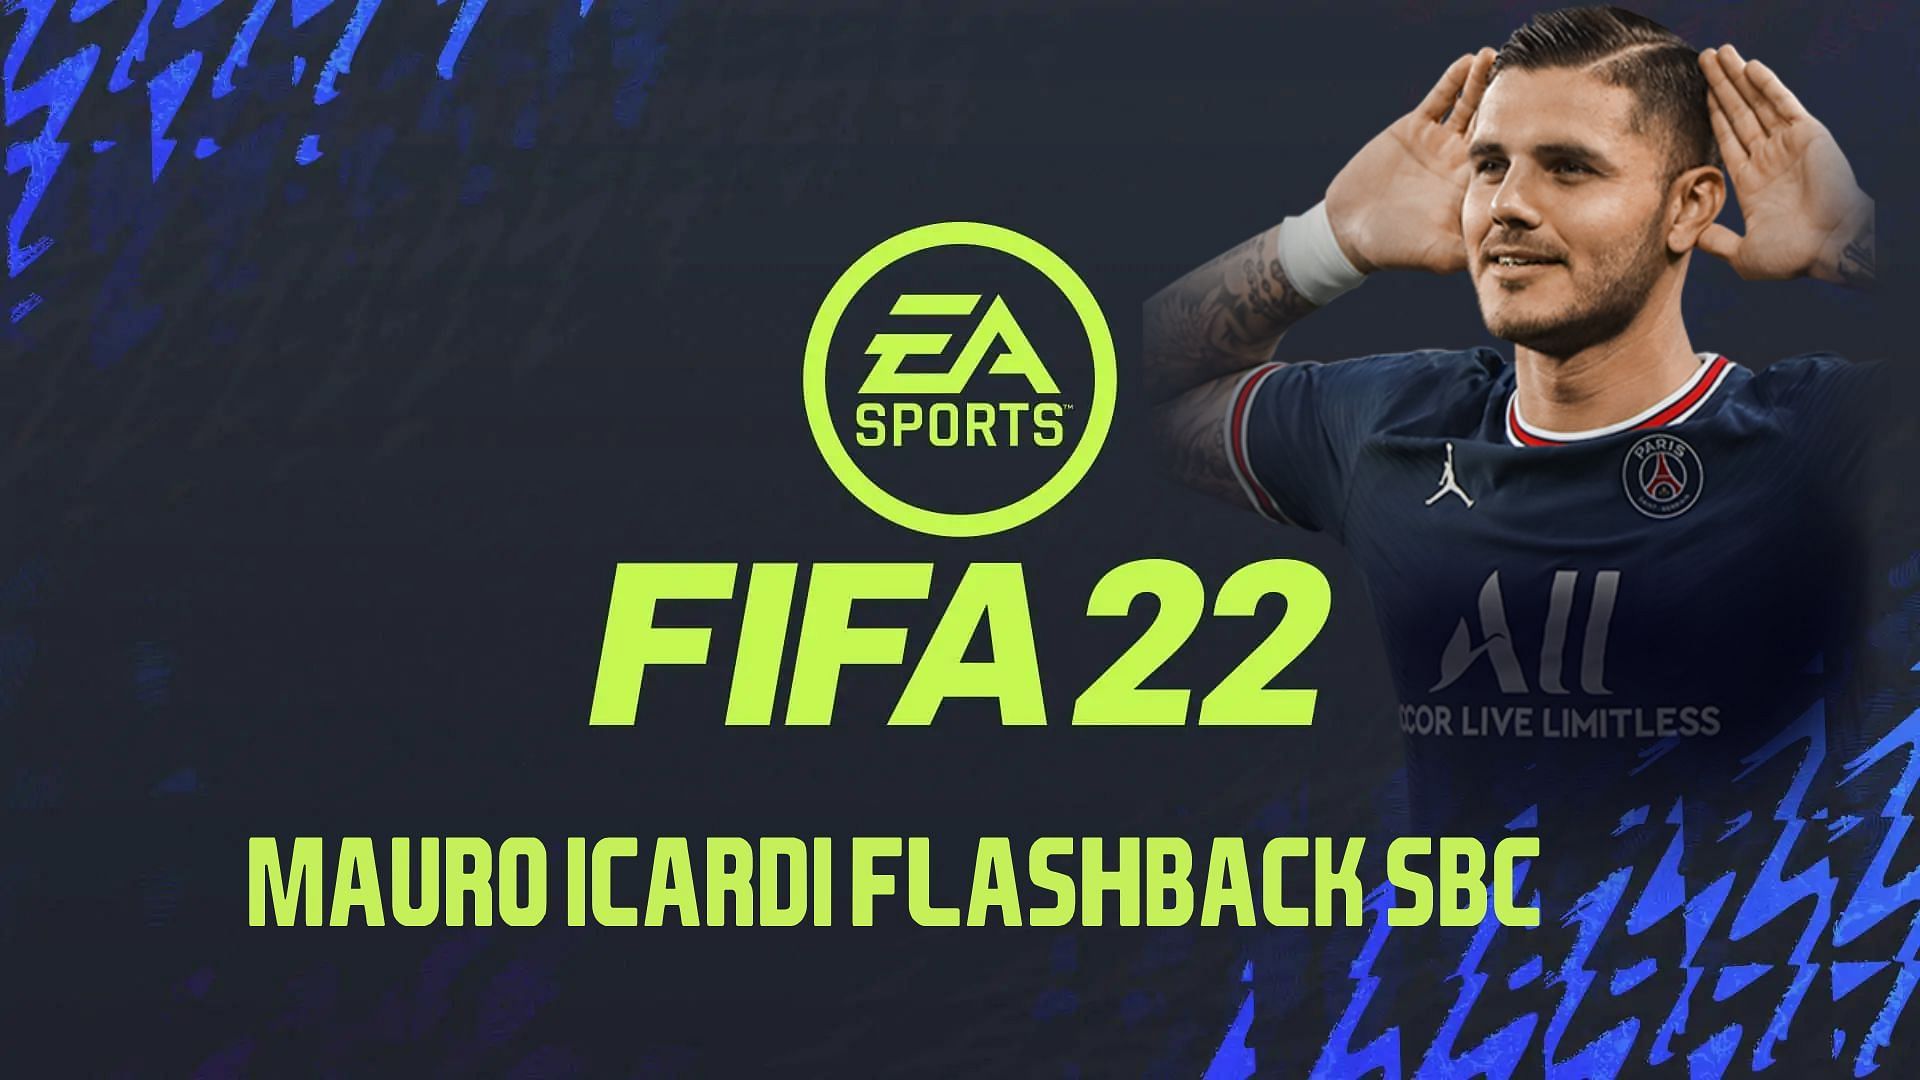 FIFA 22 Ultimate Team SBC: Mauro Icardi Flashback card